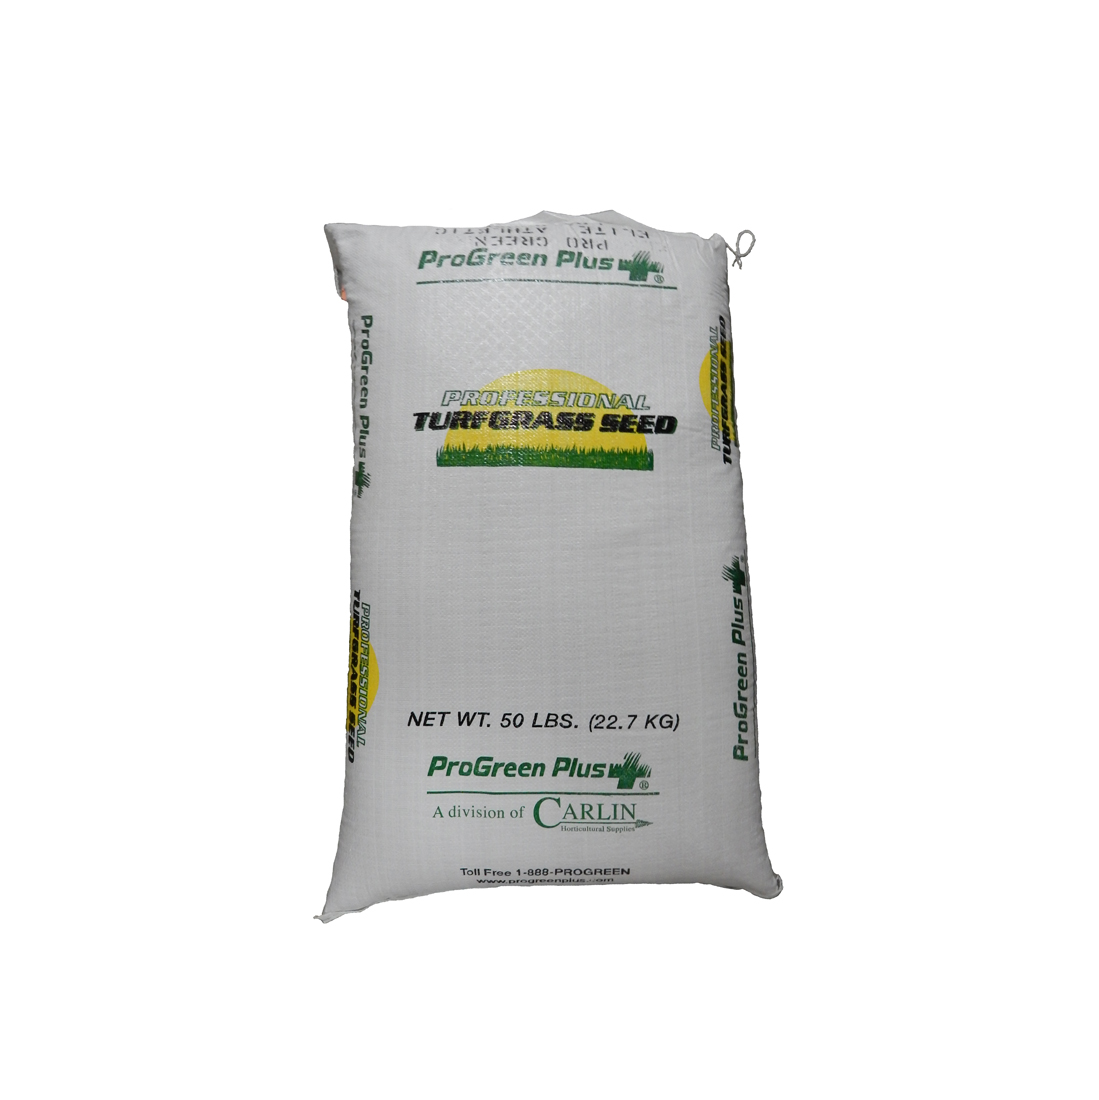 ProGreen Plus 600 Seed - 50 lb Bag - Turfgrass Seed